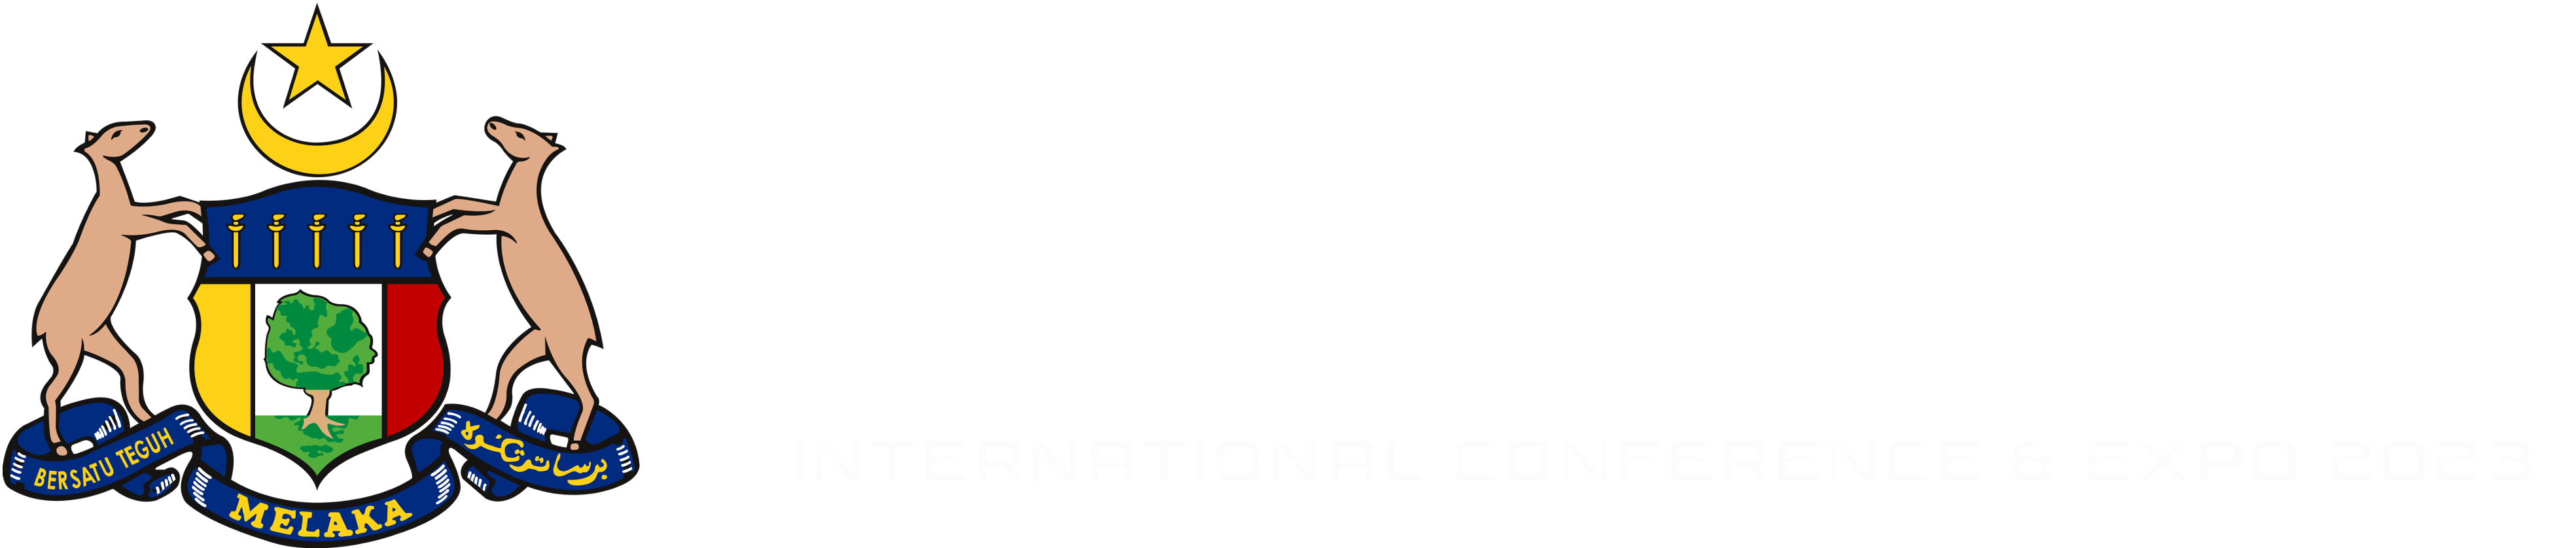 SMART MELAKA INTERNATIONAL CONFERENCE & EXPO